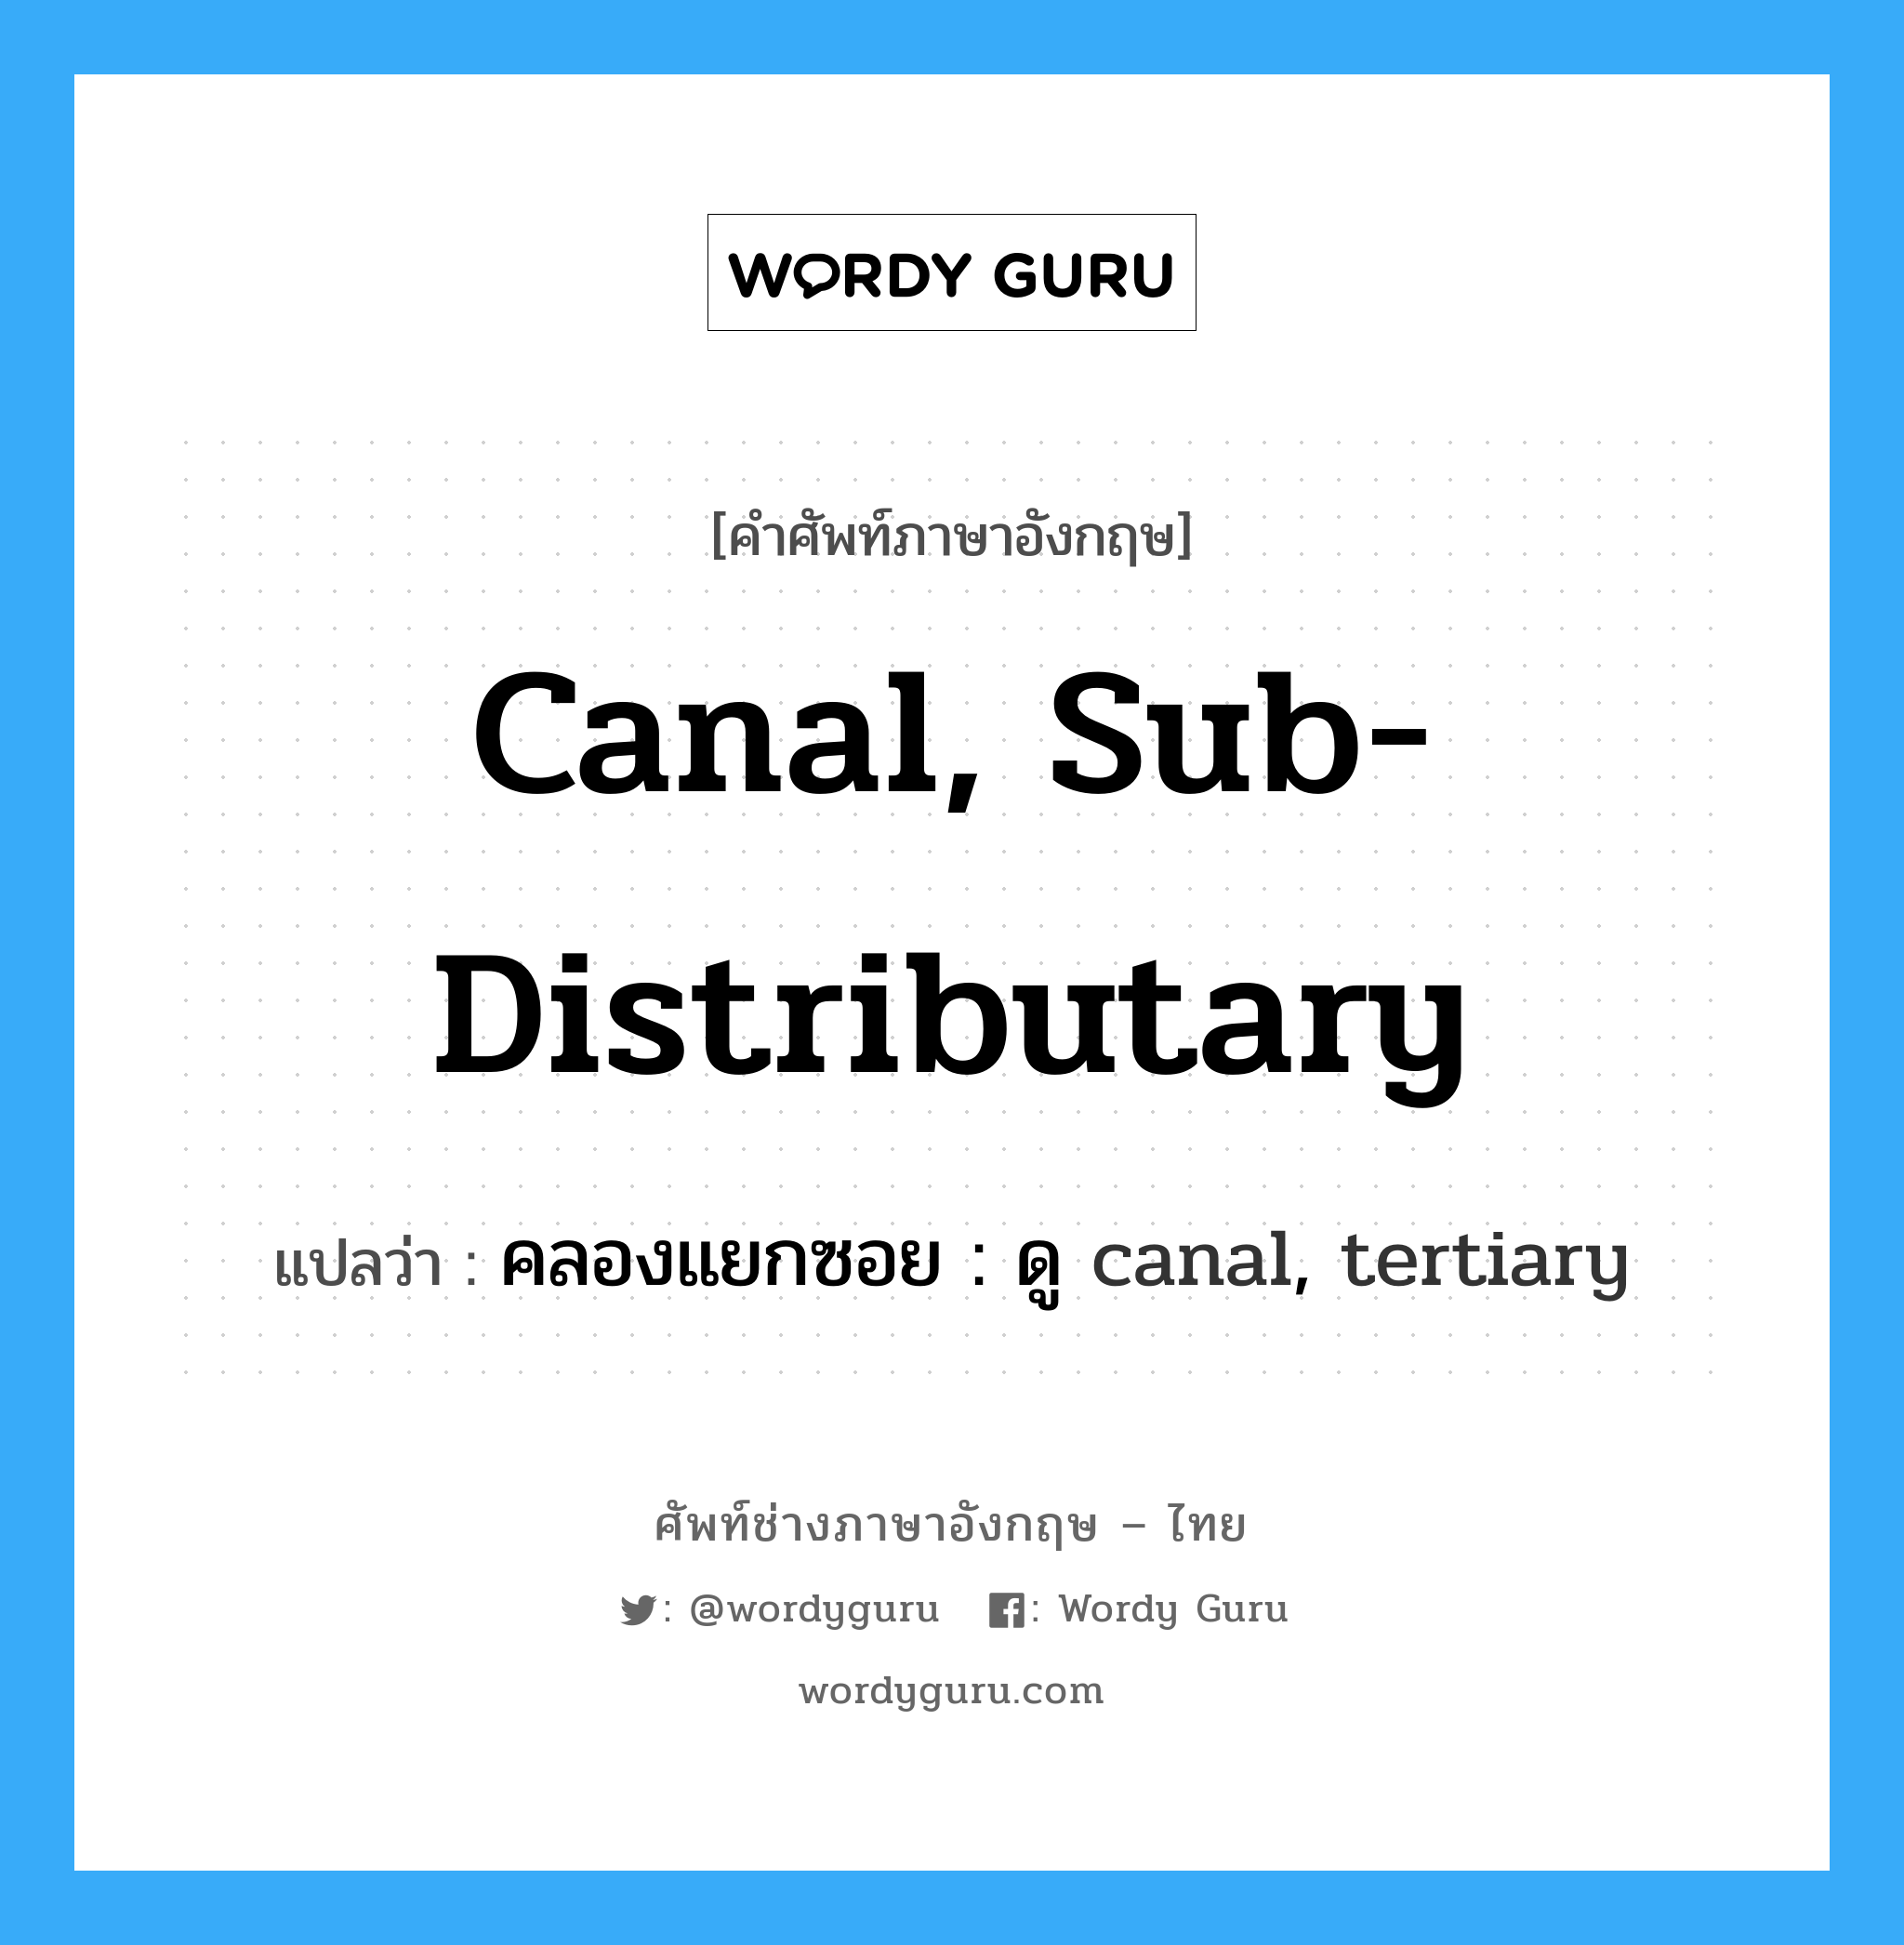 canal, sub-distributary แปลว่า?, คำศัพท์ช่างภาษาอังกฤษ - ไทย canal, sub-distributary คำศัพท์ภาษาอังกฤษ canal, sub-distributary แปลว่า คลองแยกซอย : ดู canal, tertiary